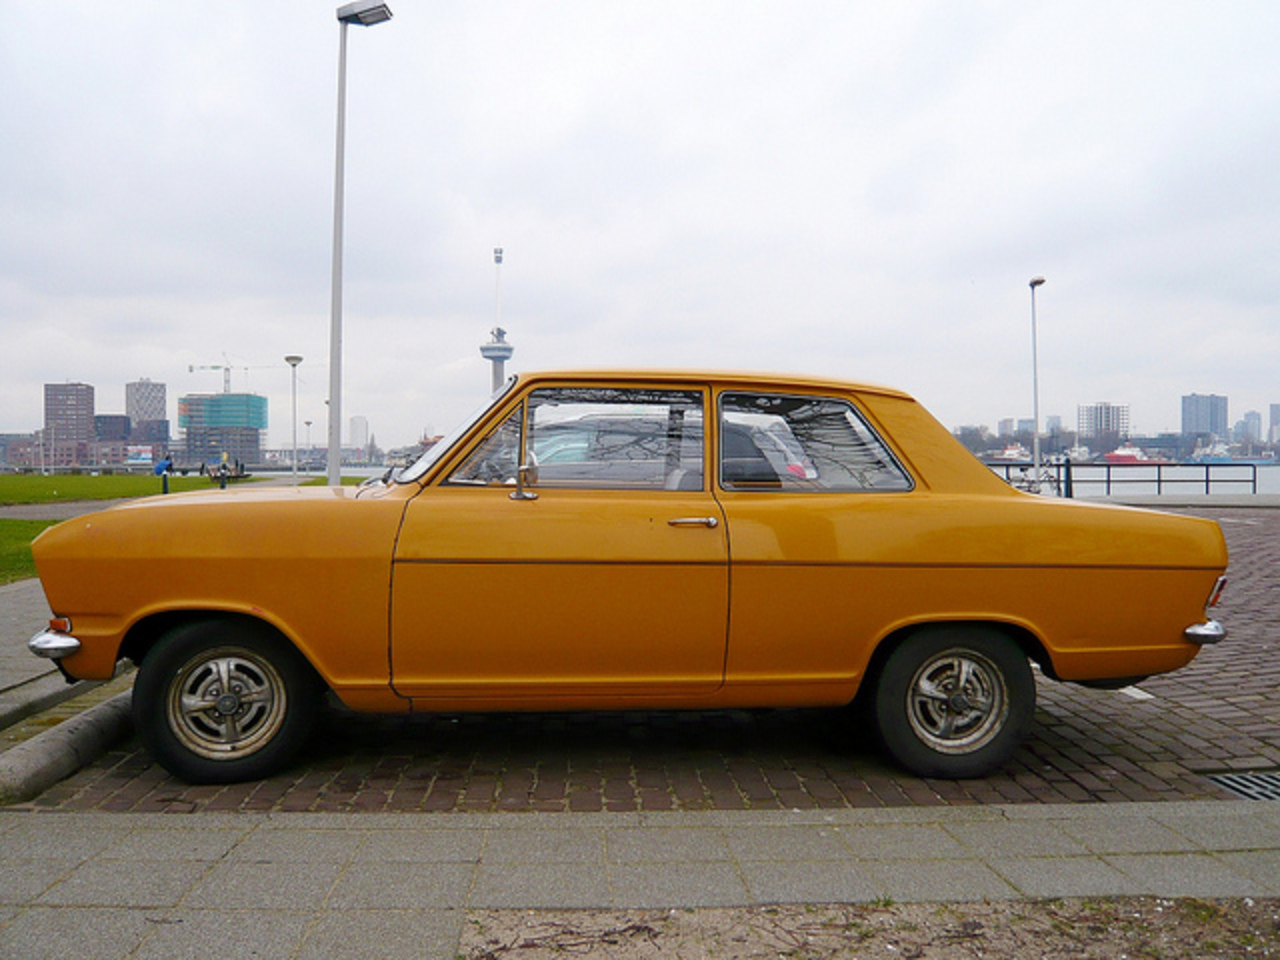 Opel Kadett 12 Automatic - 1973 | Flickr - Photo Sharing!